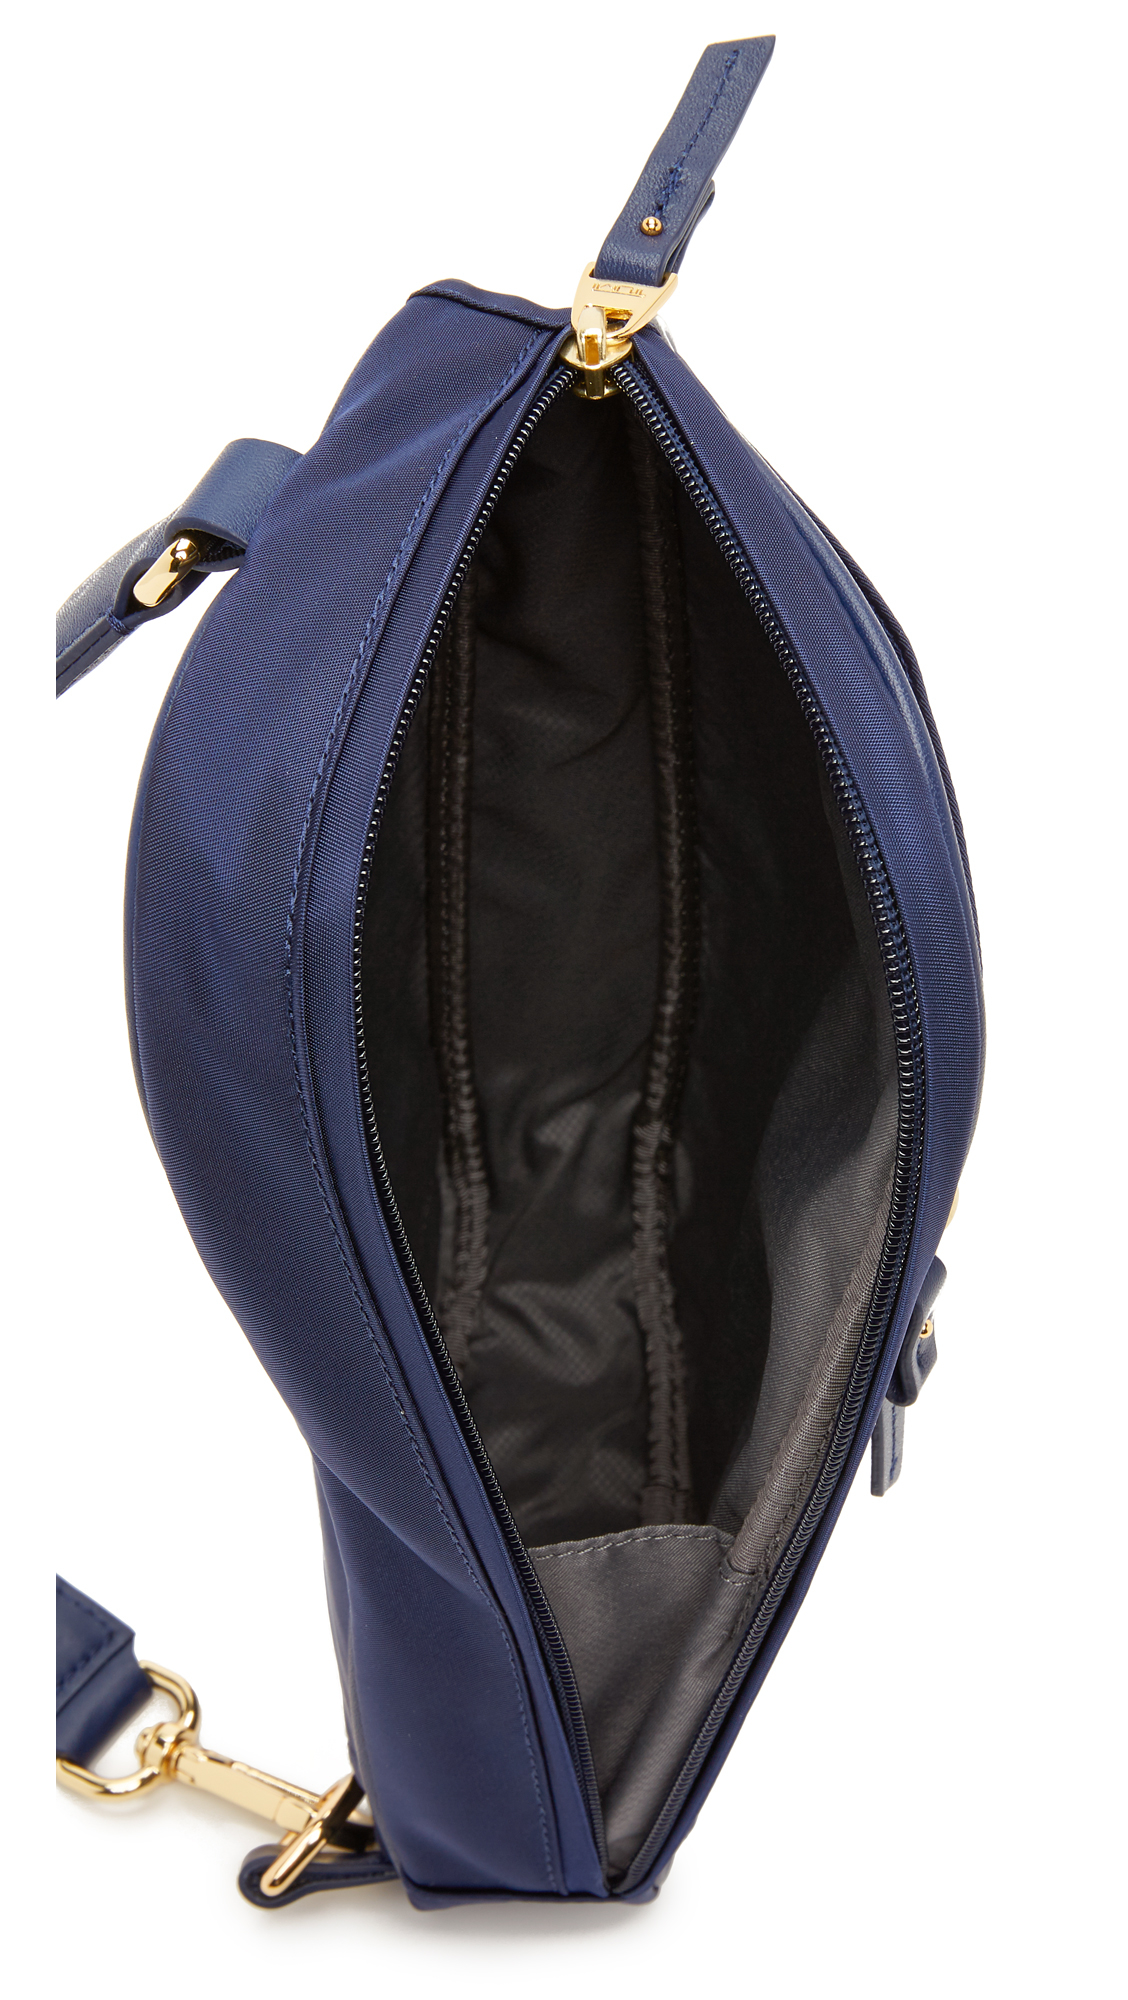 Lyst - Tumi Mila Small Sling Bag in Blue